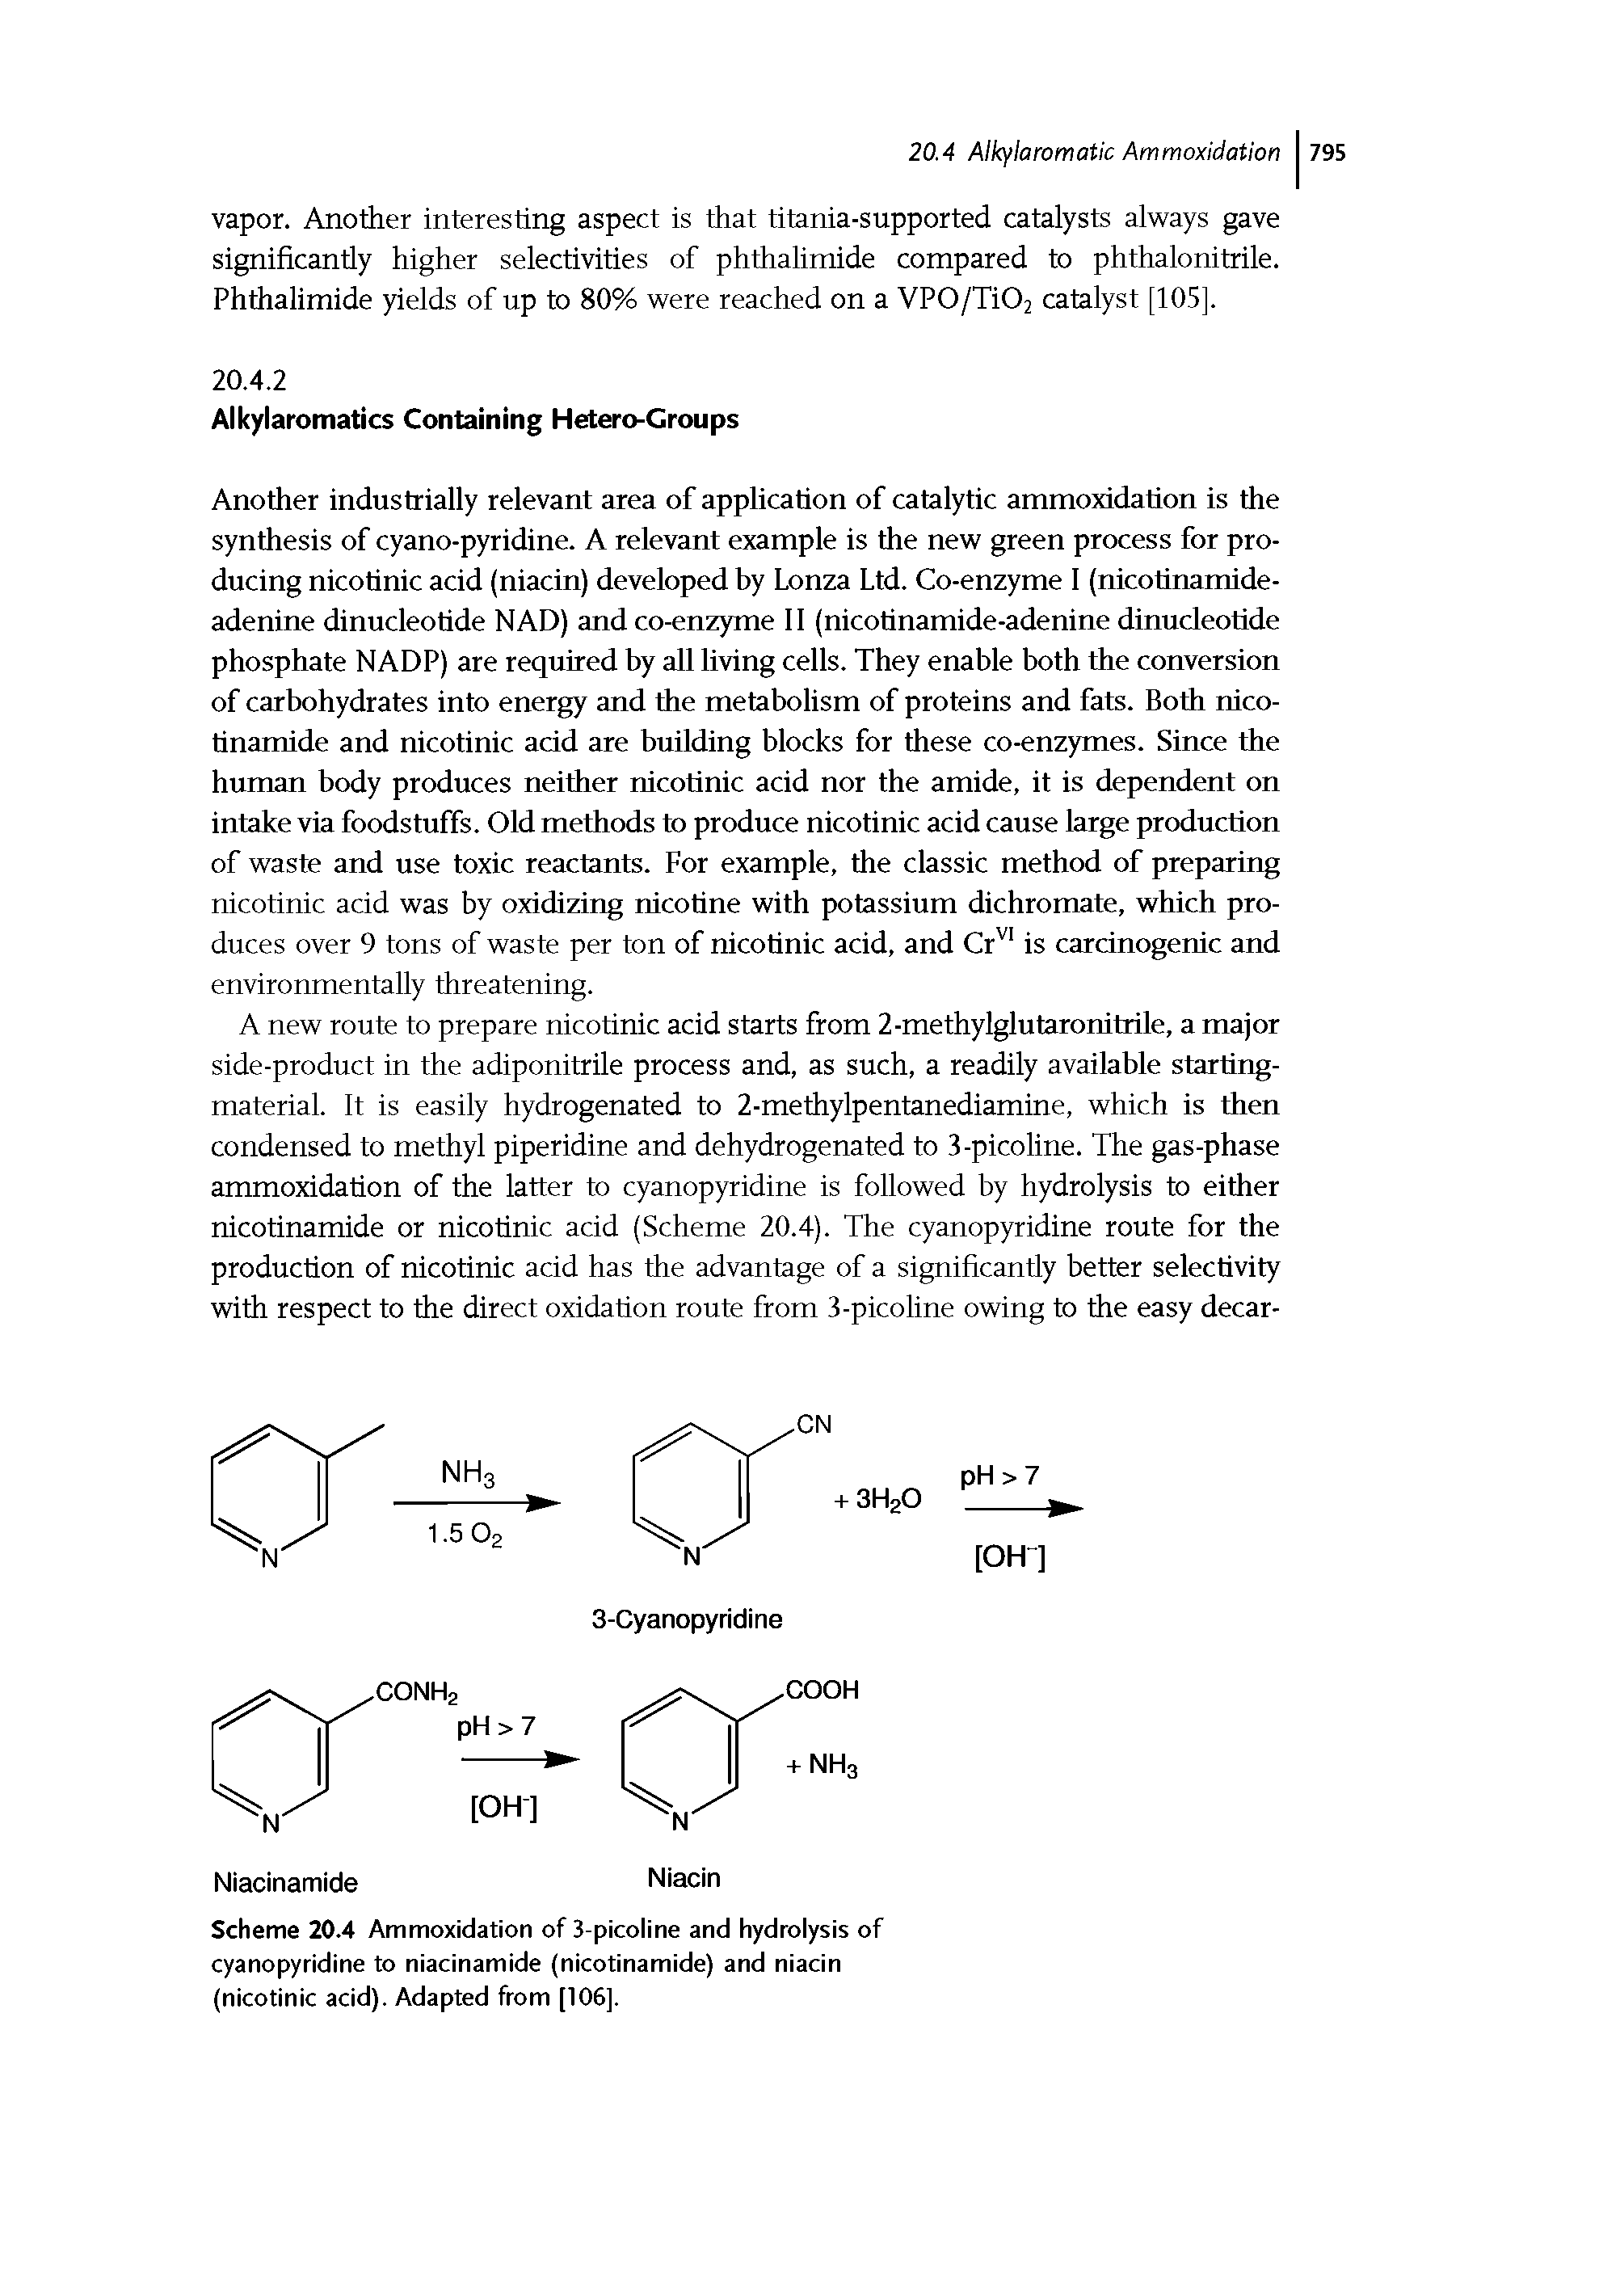 Scheme 20.4 Ammoxidation of 3-picoline and hydrolysis of cyanopyridine to niacinamide (nicotinamide) and niacin (nicotinic acid). Adapted from [106].